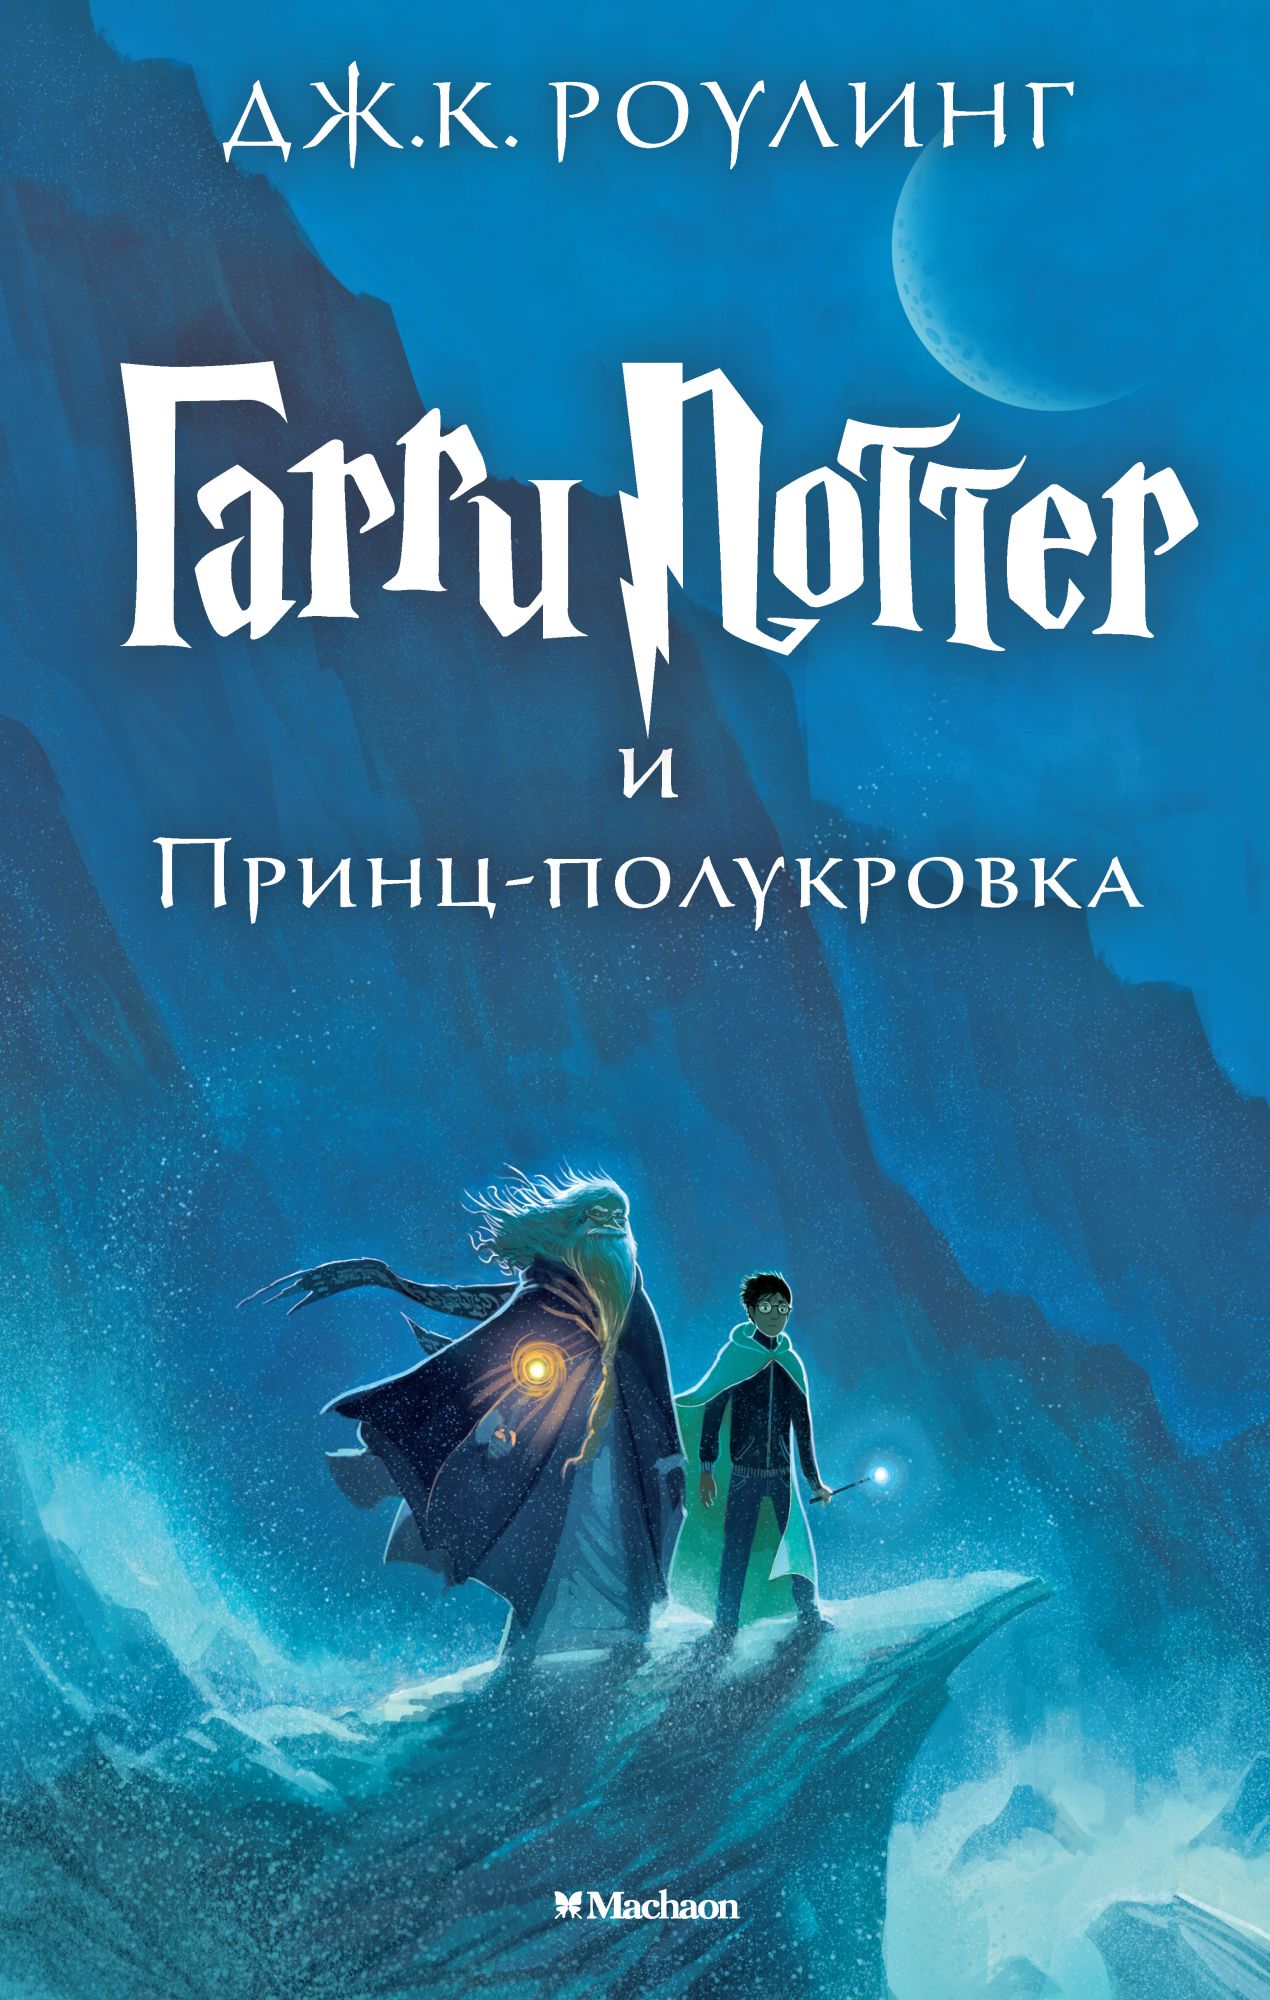 Book “Гарри Поттер и Принц-полукровка” by Джоан К. Роулинг